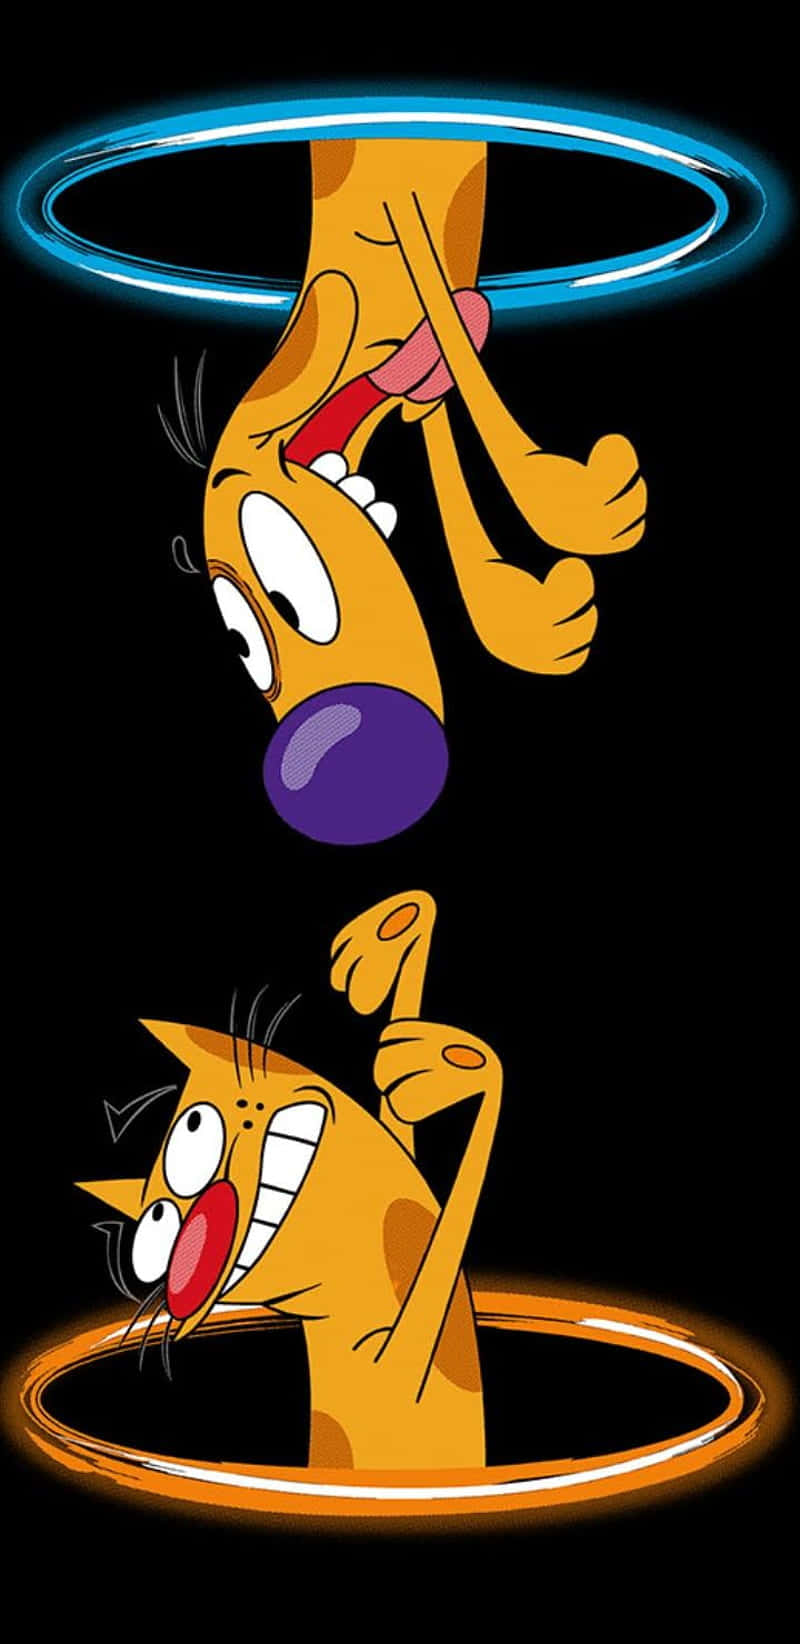 Two Cartoon Cats In A Hoop